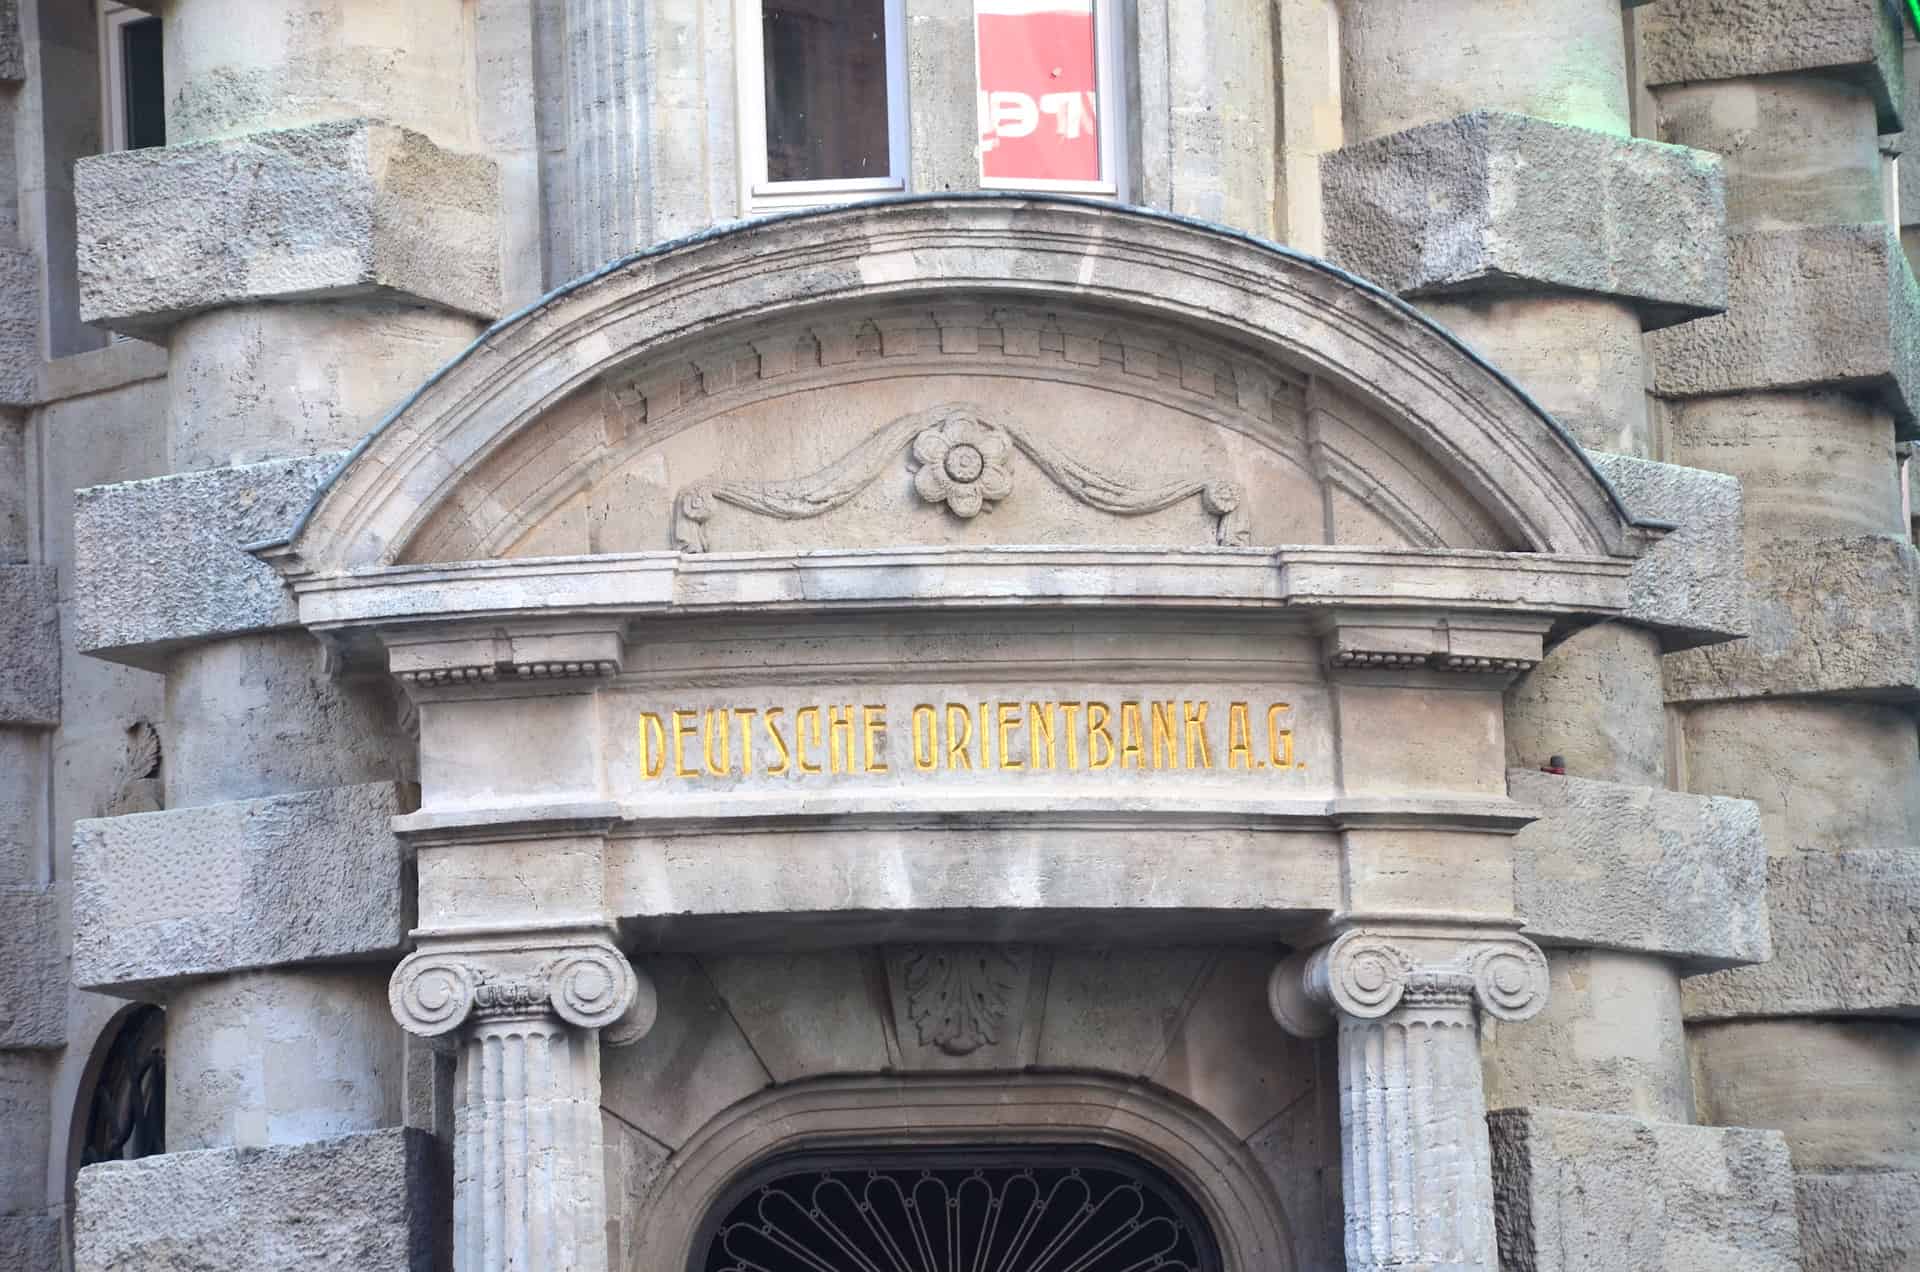 Deutsche Orientbank inscription on Germanya Han in Eminönü, Istanbul, Turkey